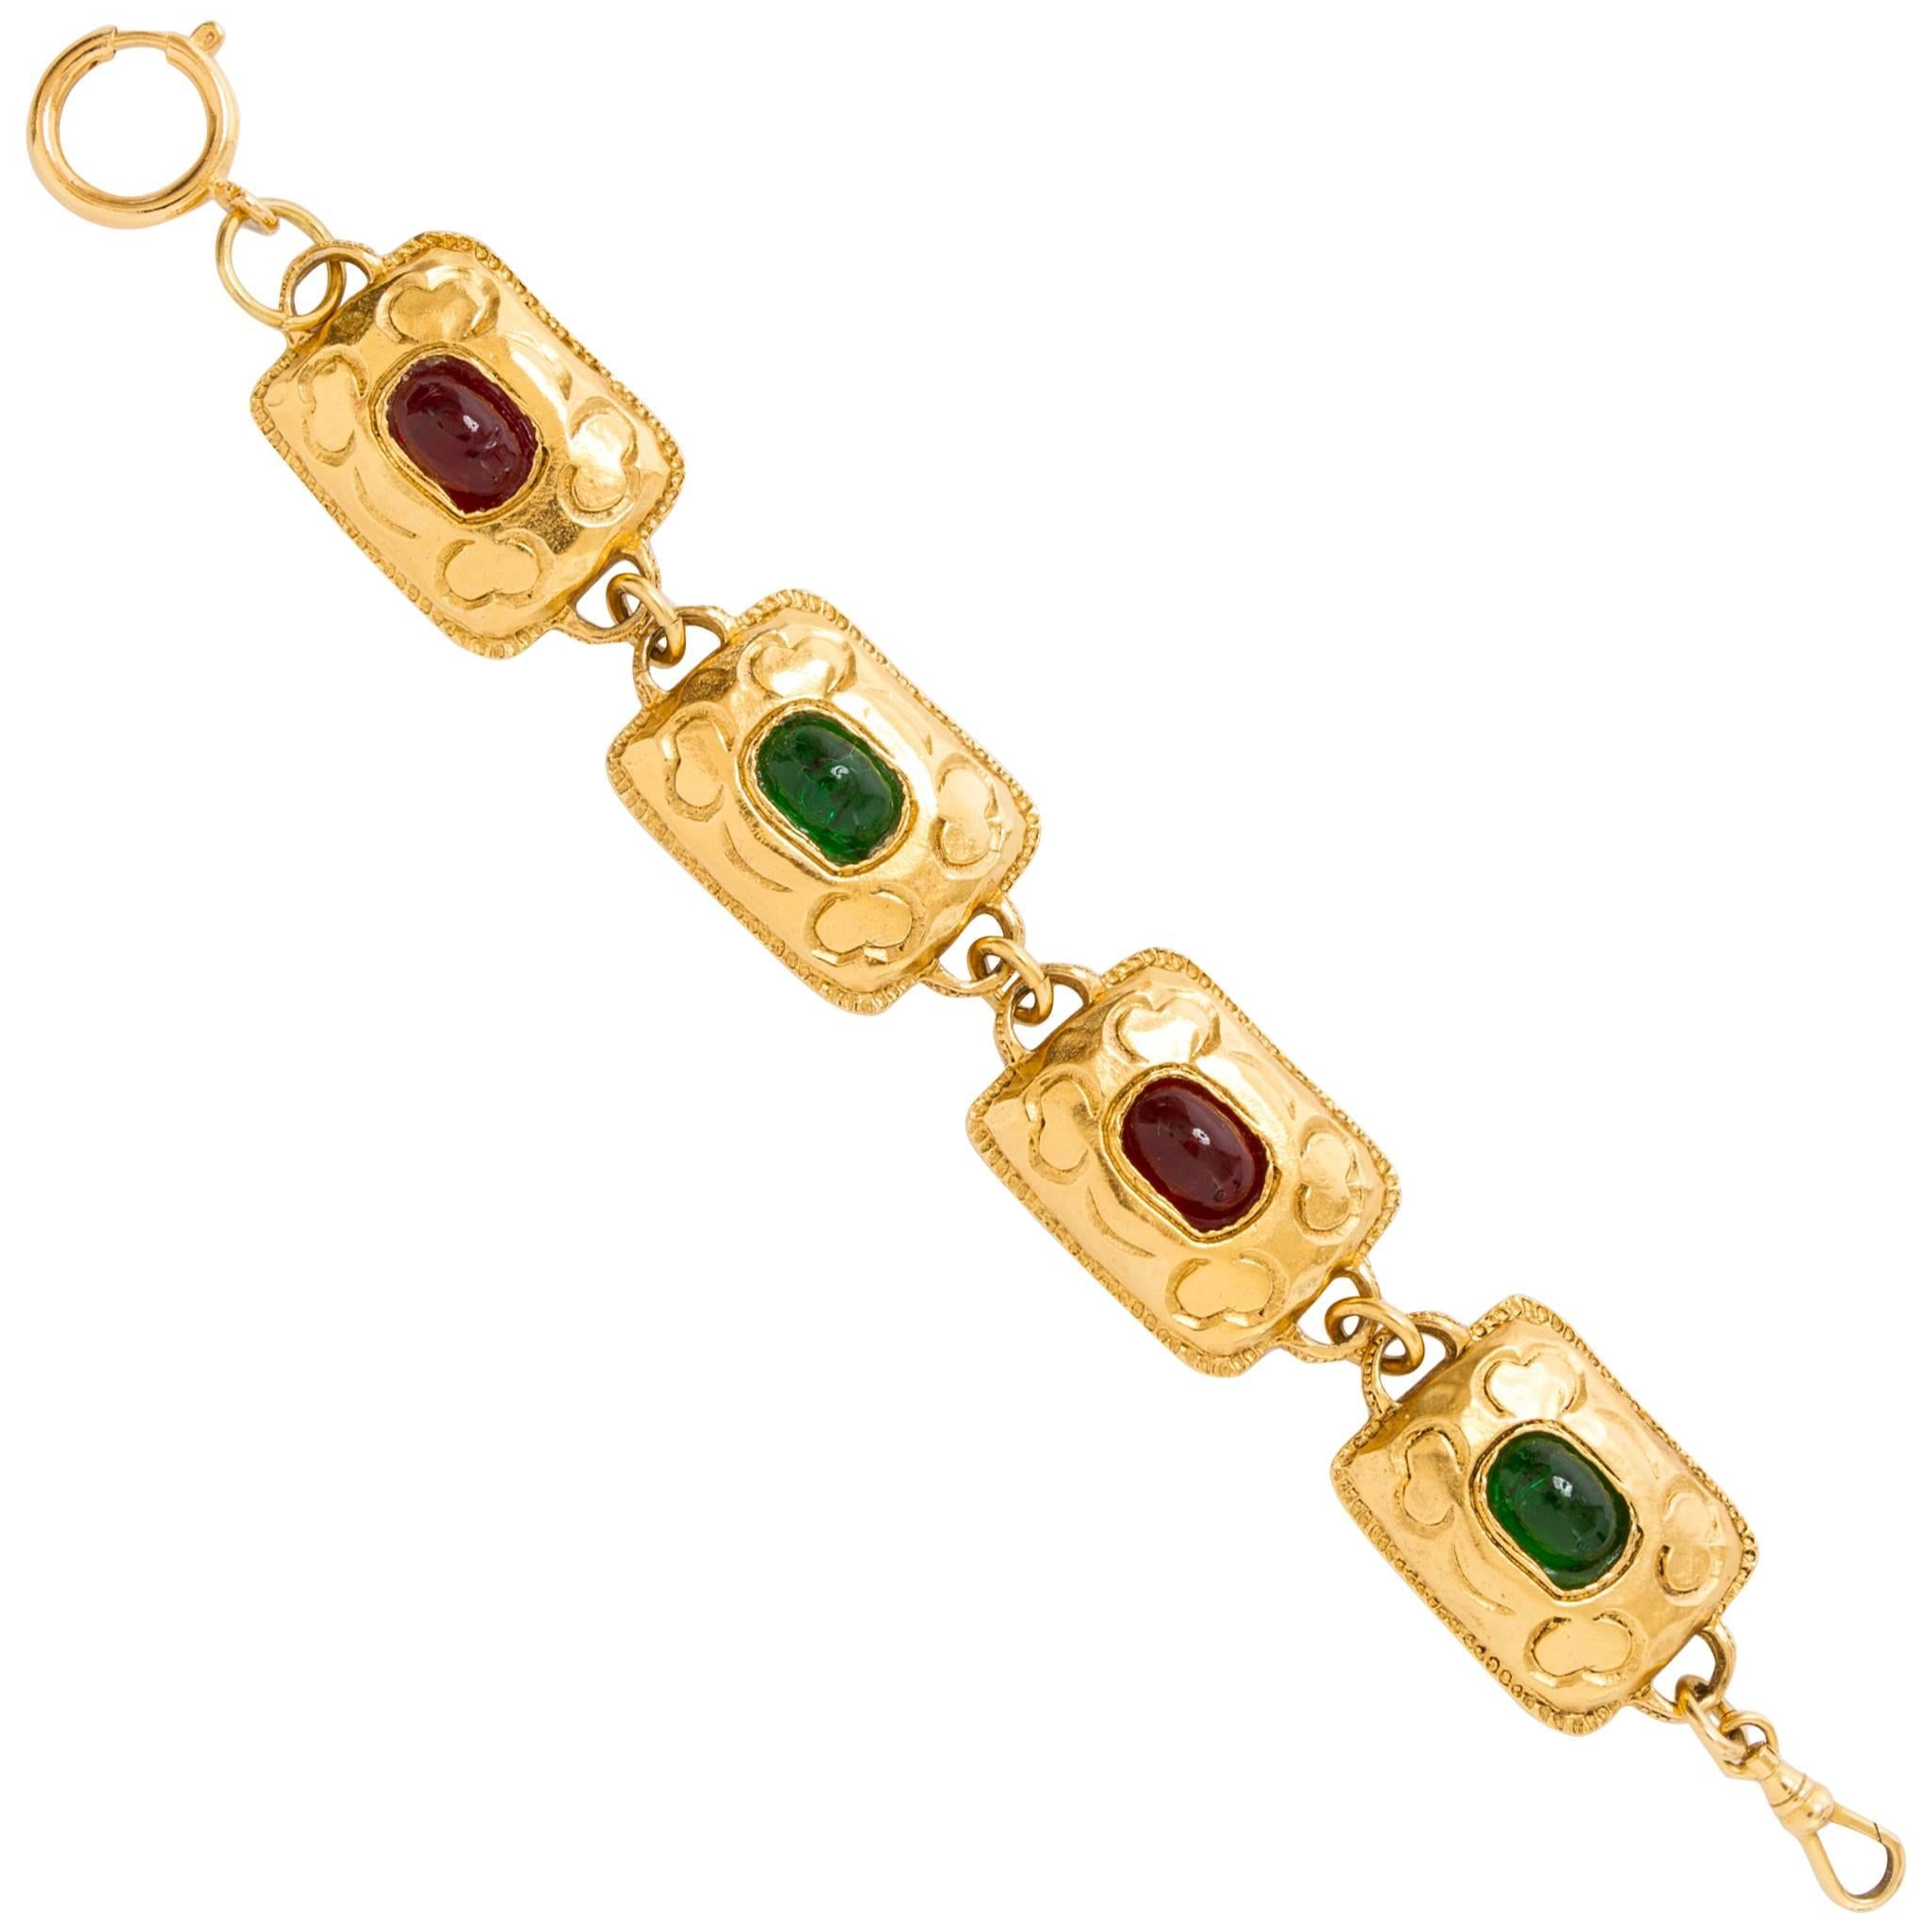 Chanel 1970's Vintage Gold Plated Square Gripoix Bracelet